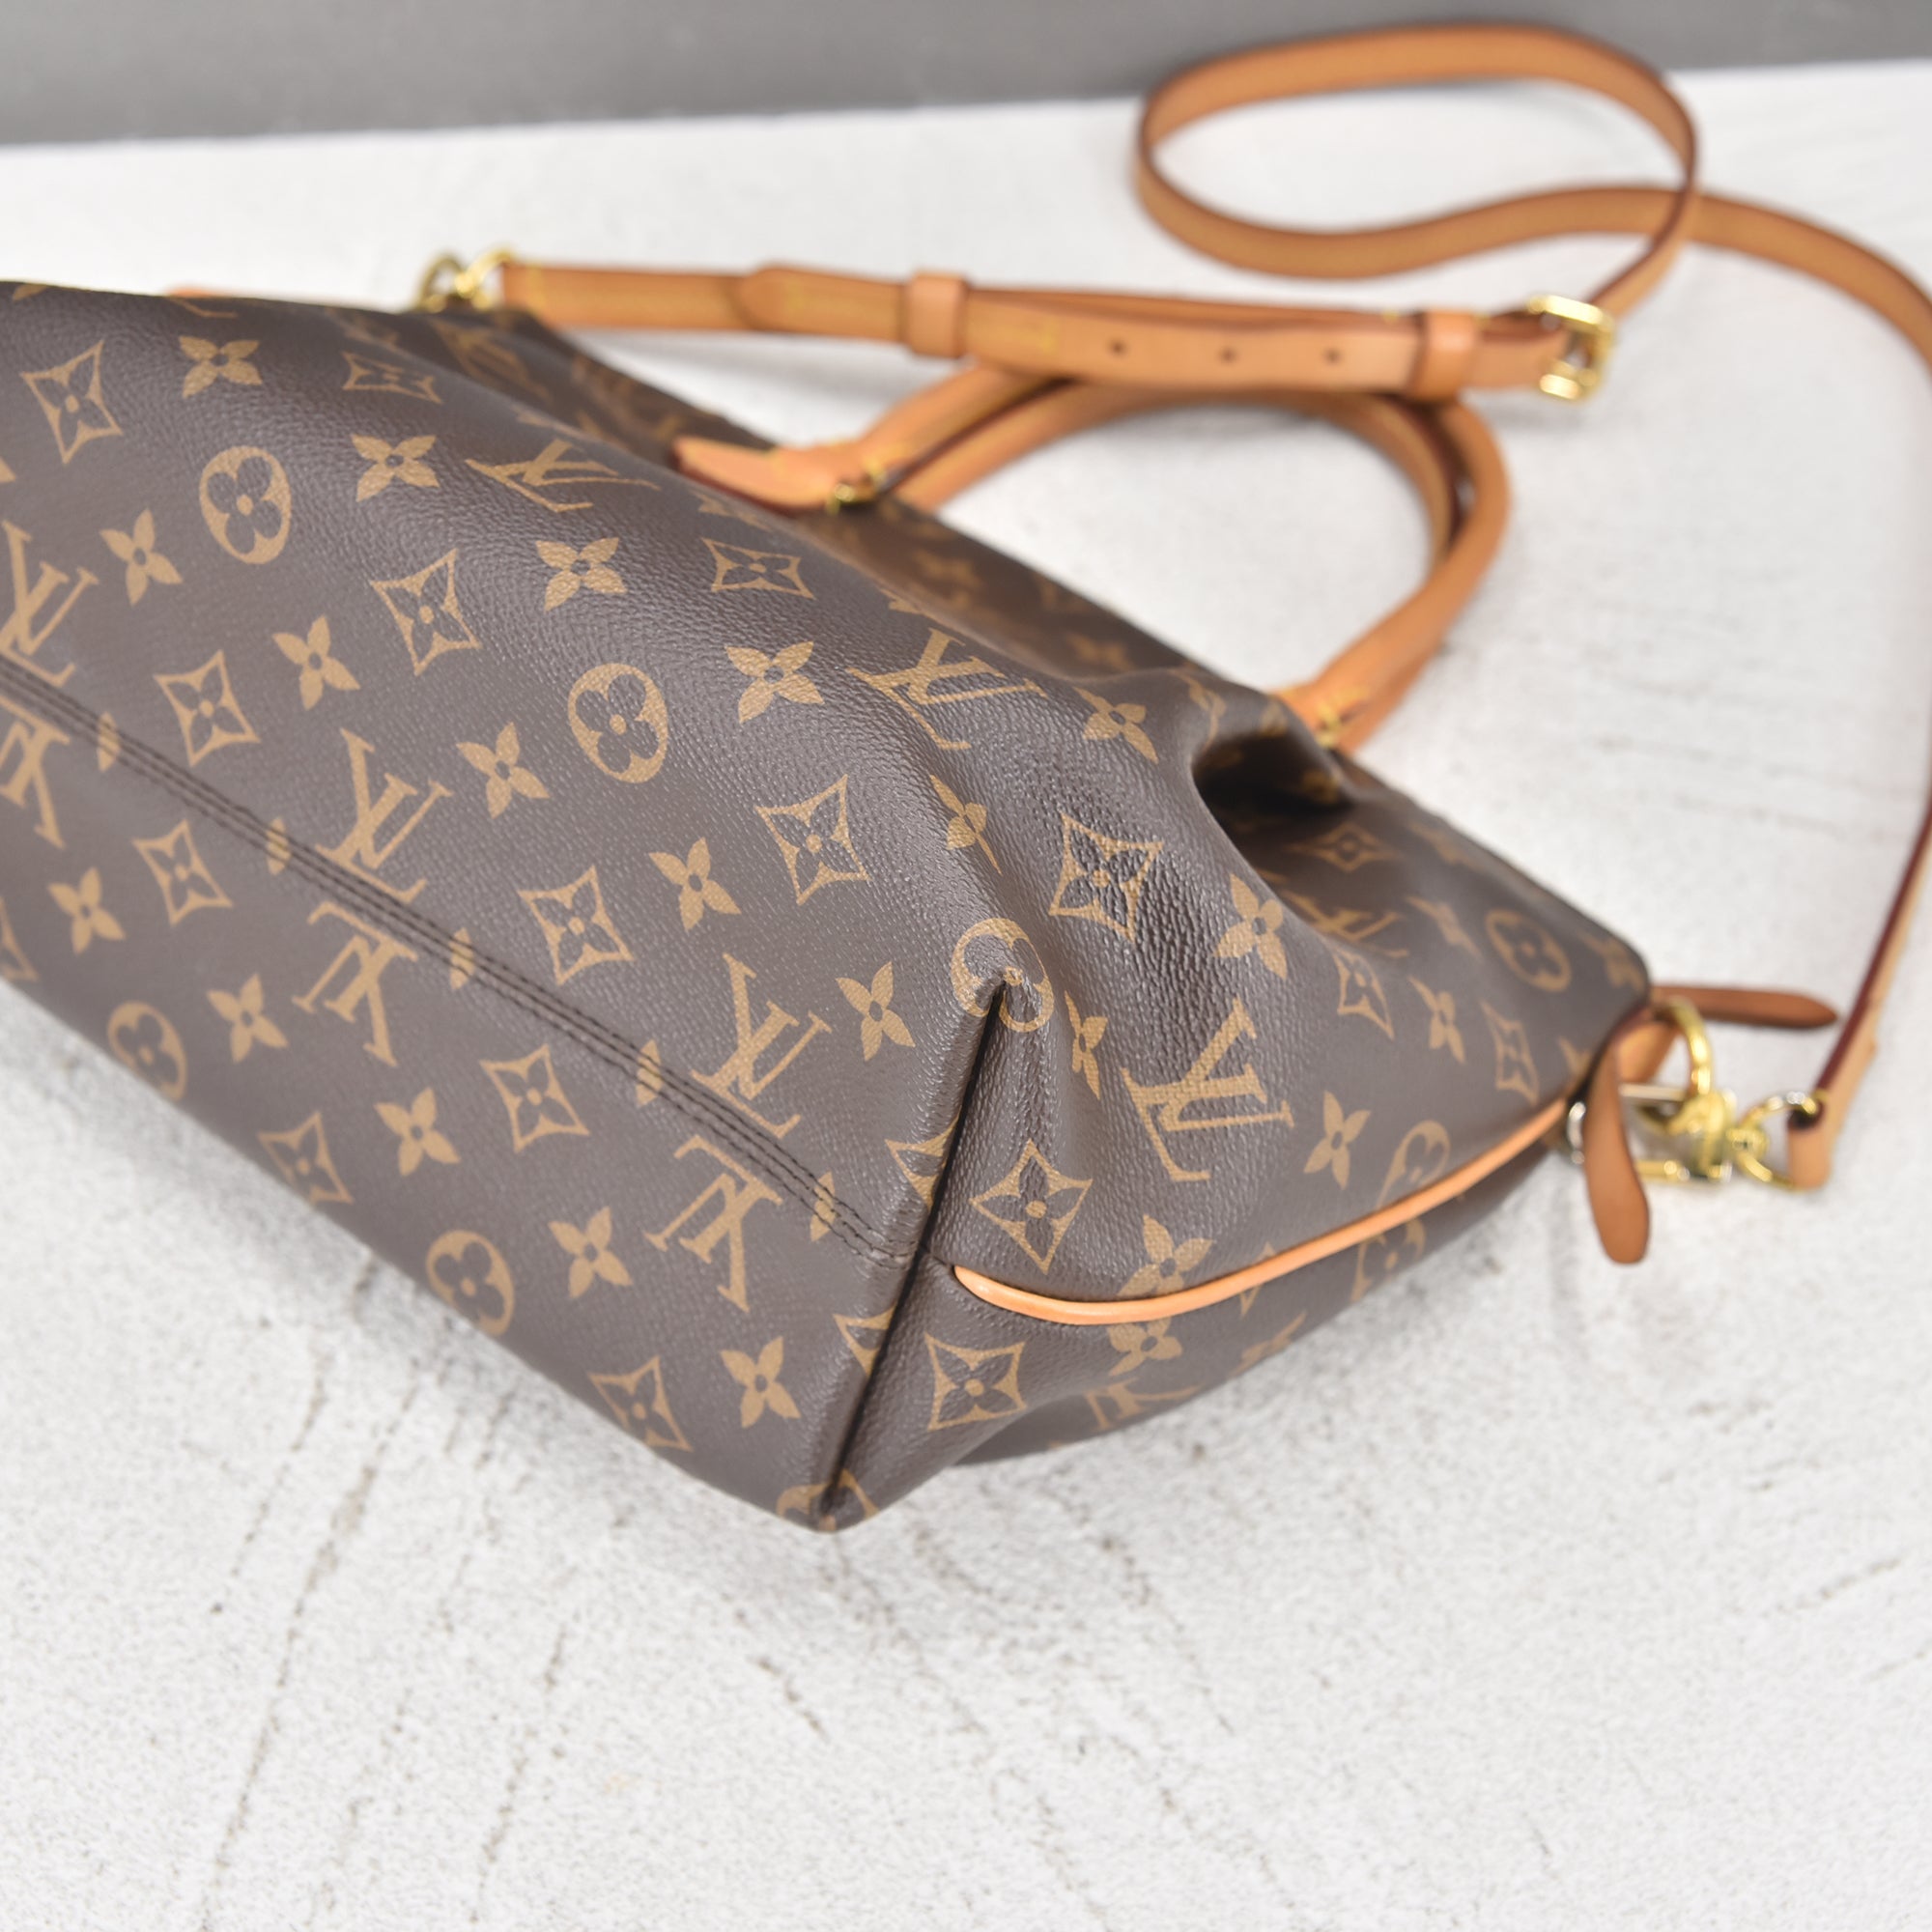 Louis Vuitton Authenticated Turenne Handbag